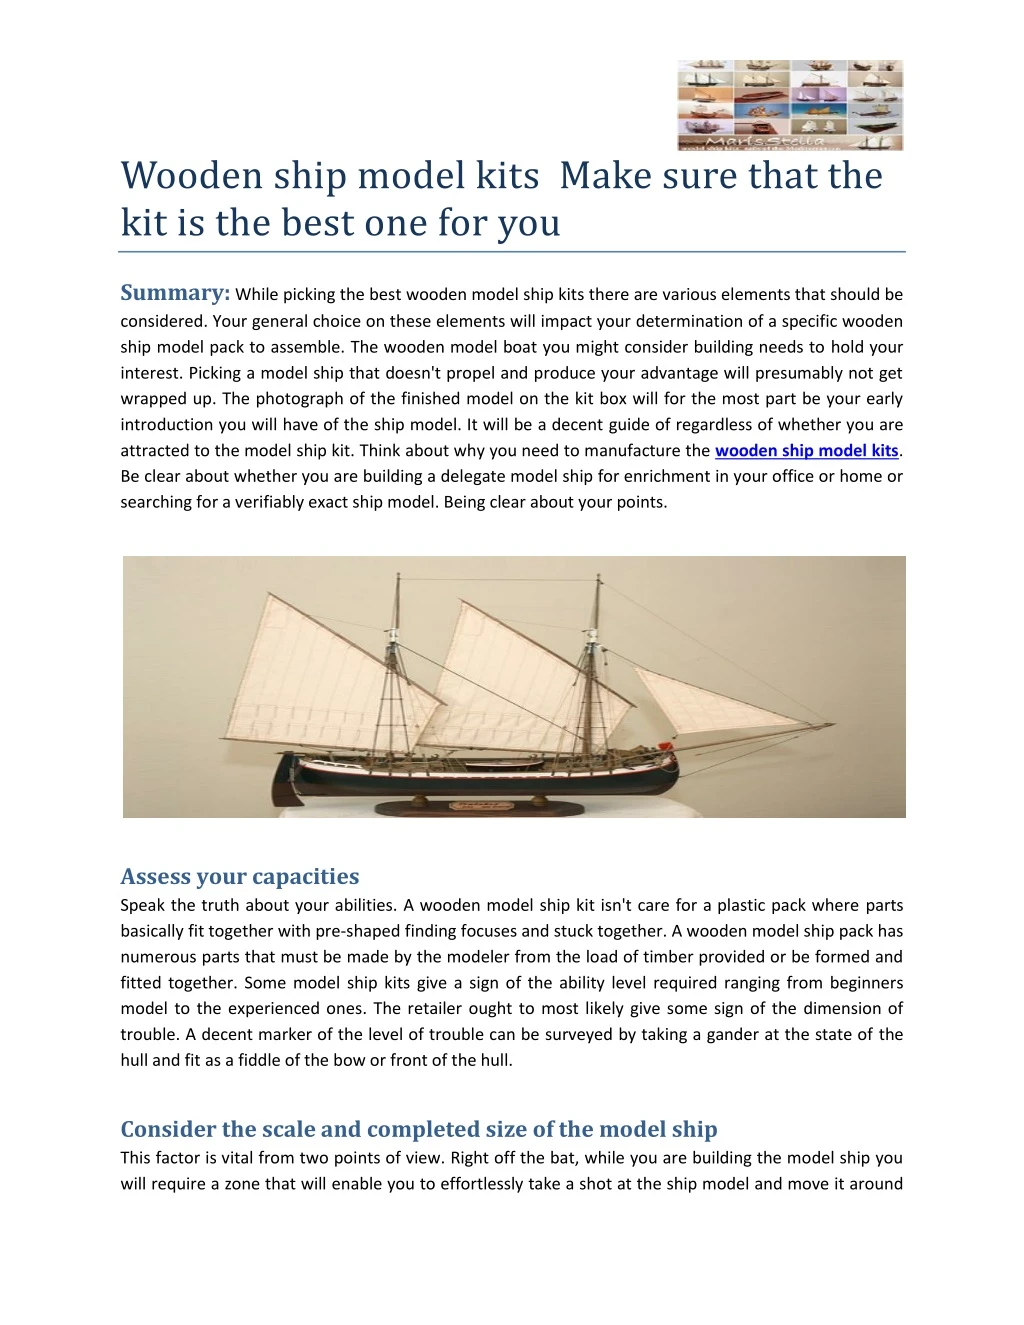 wooden ship model kits make sure that